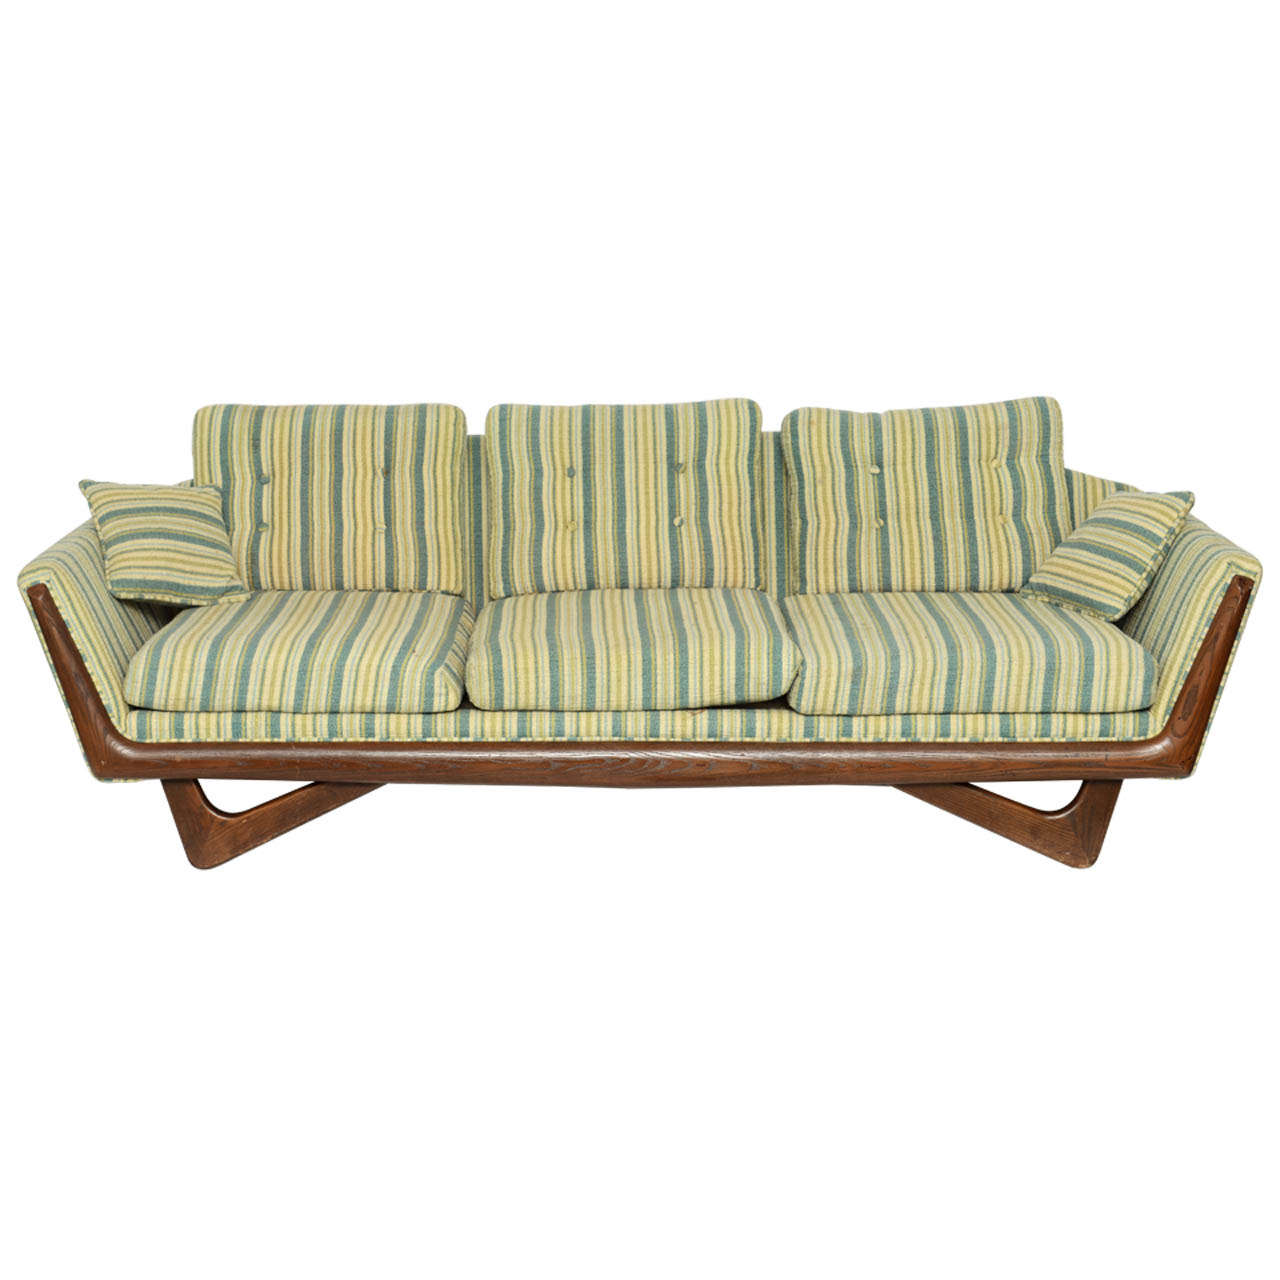 Adrian Pearsall Boomerang Sofa w/ Walnut Trim- Original Striped Upholstery 1960